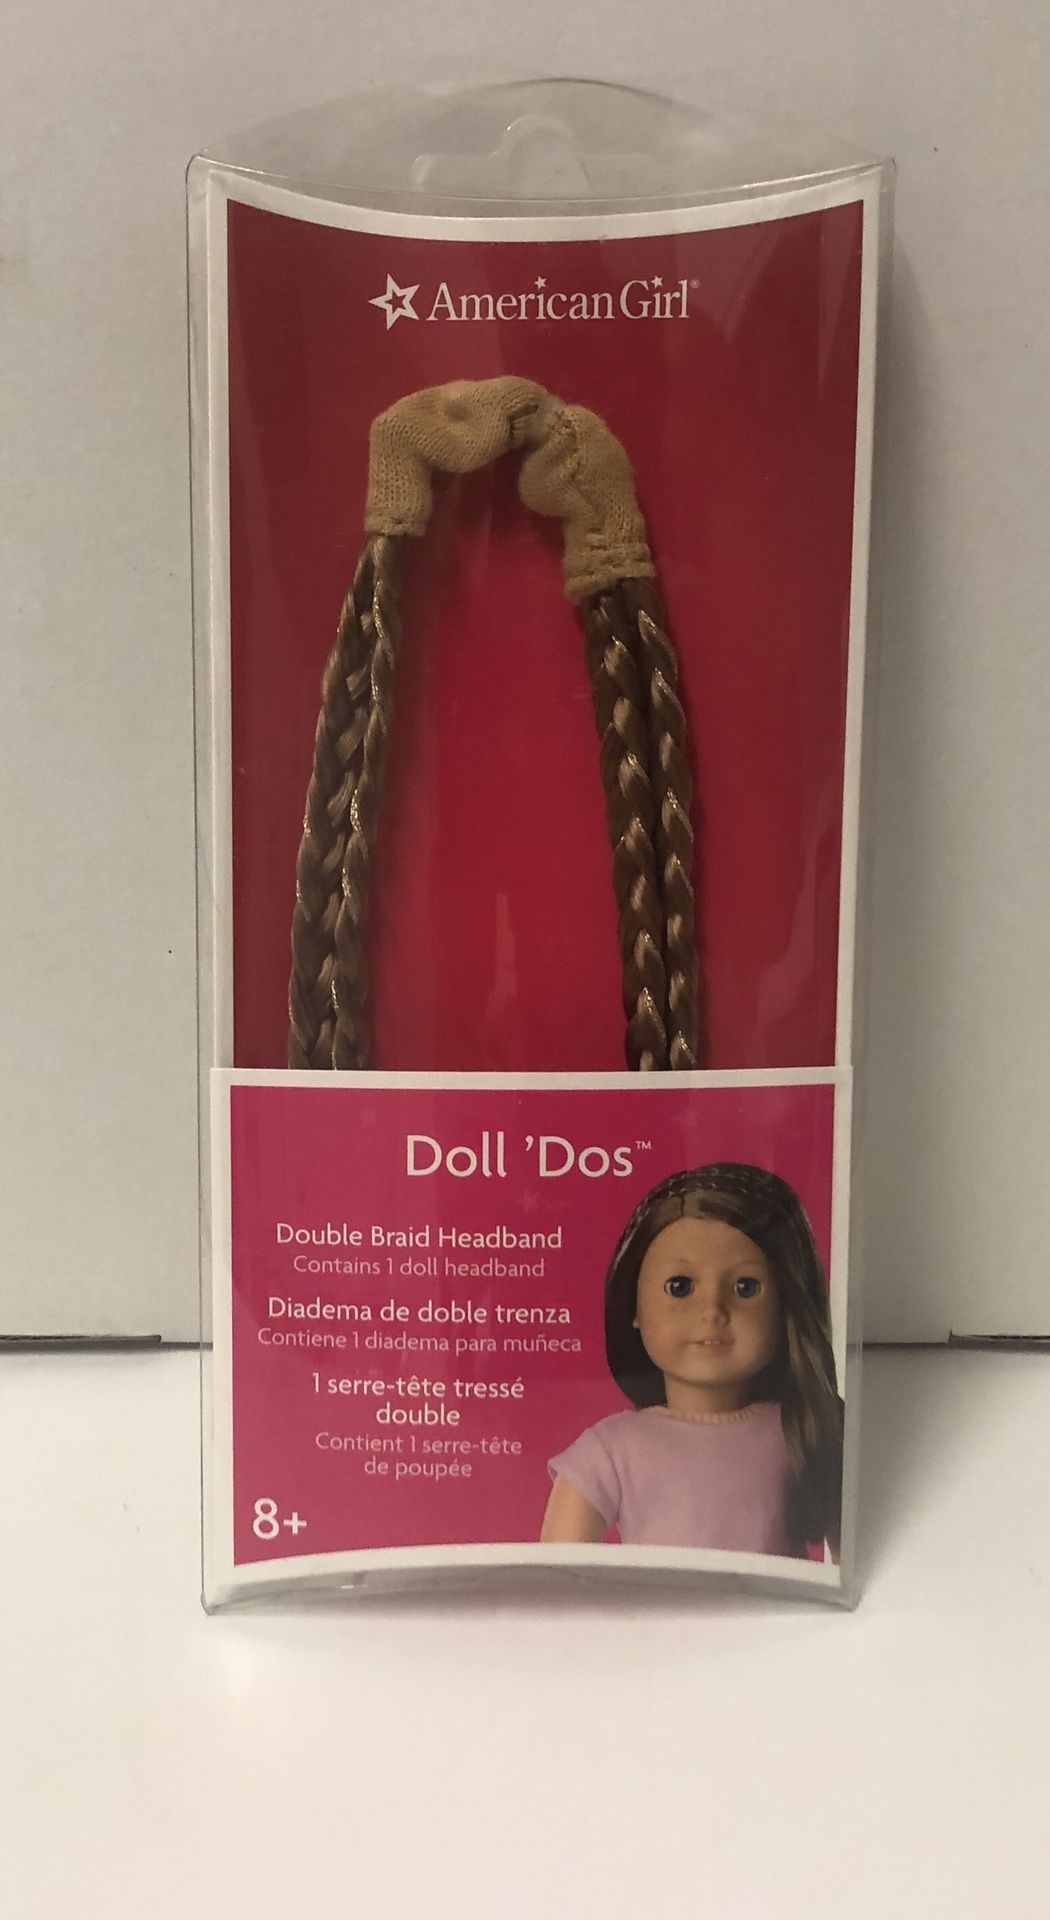 American Girl: Doll’Dos